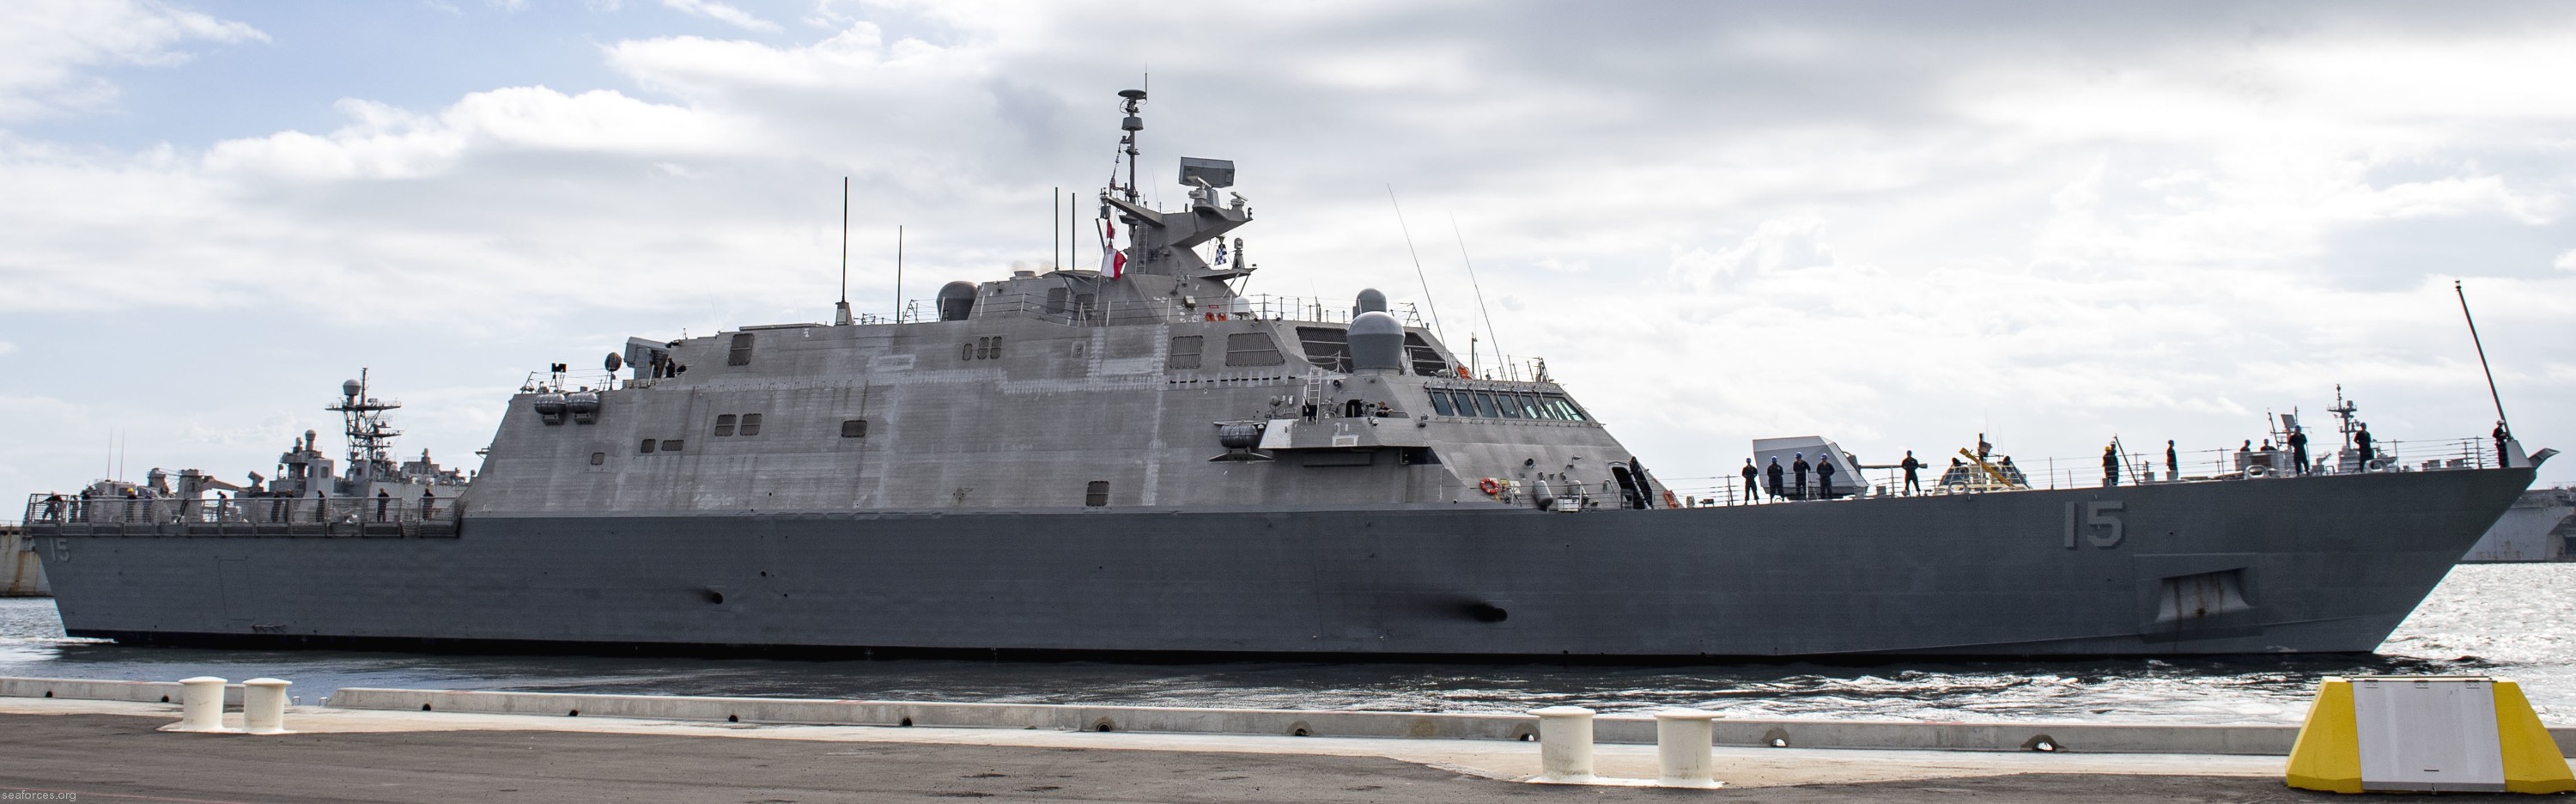 lcs-15 uss billings freedom class littoral combat ship us navy26 mayport jacksonville florida